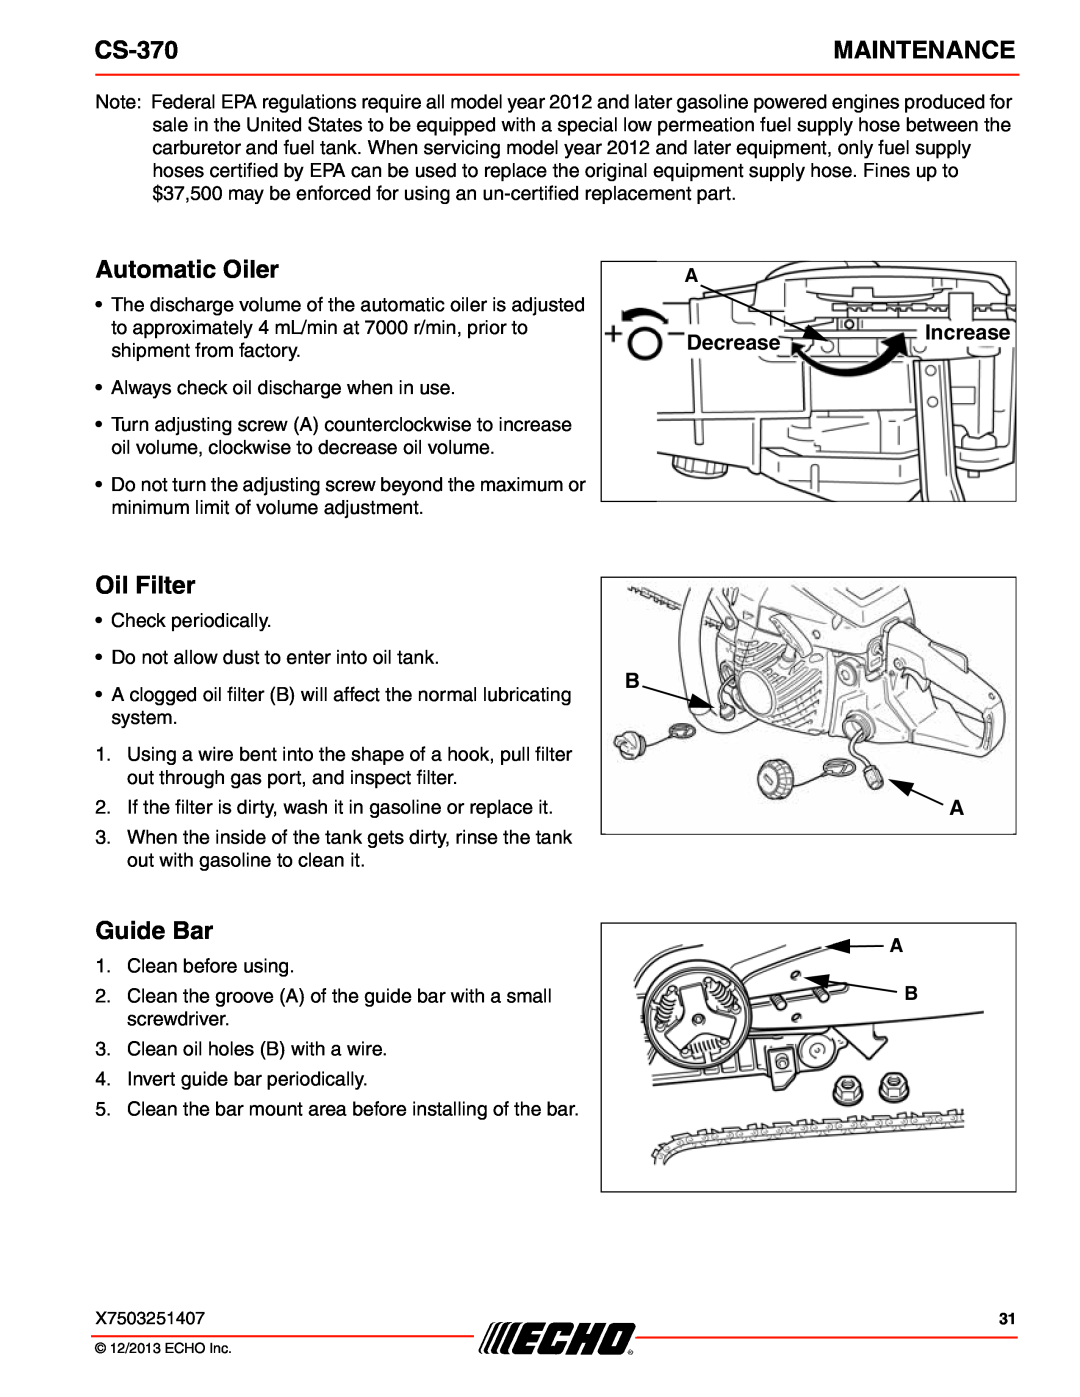 Echo CS-370 instruction manual Automatic Oiler, Oil Filter, Decrease Increase, Maintenance, Guide Bar 